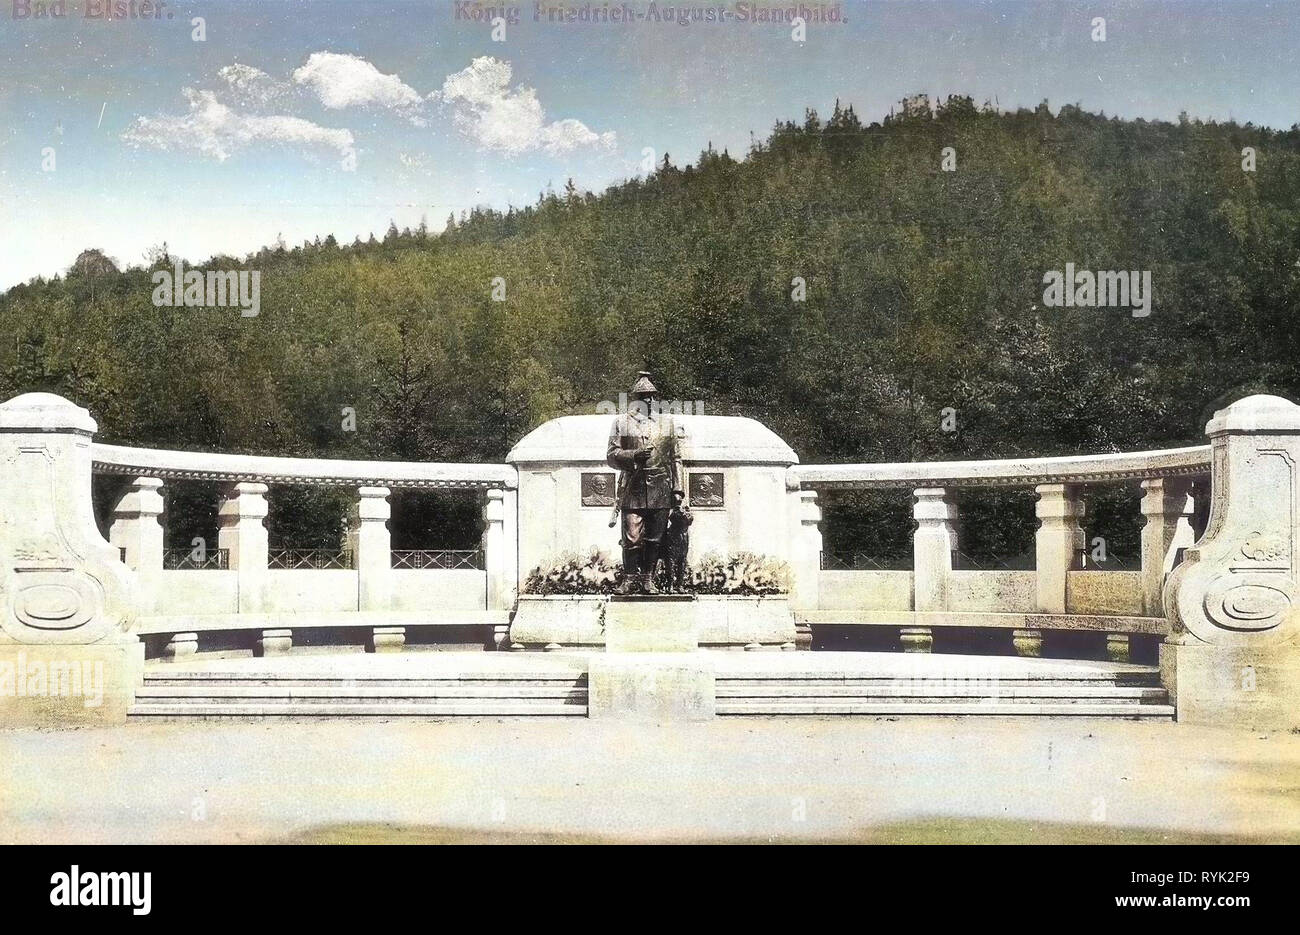 Frederick Augustus III of Saxony, Monuments and memorials to people in Germany, 1914, Vogtlandkreis, Bad Elster, Friedrich, August, Standbild Stock Photo